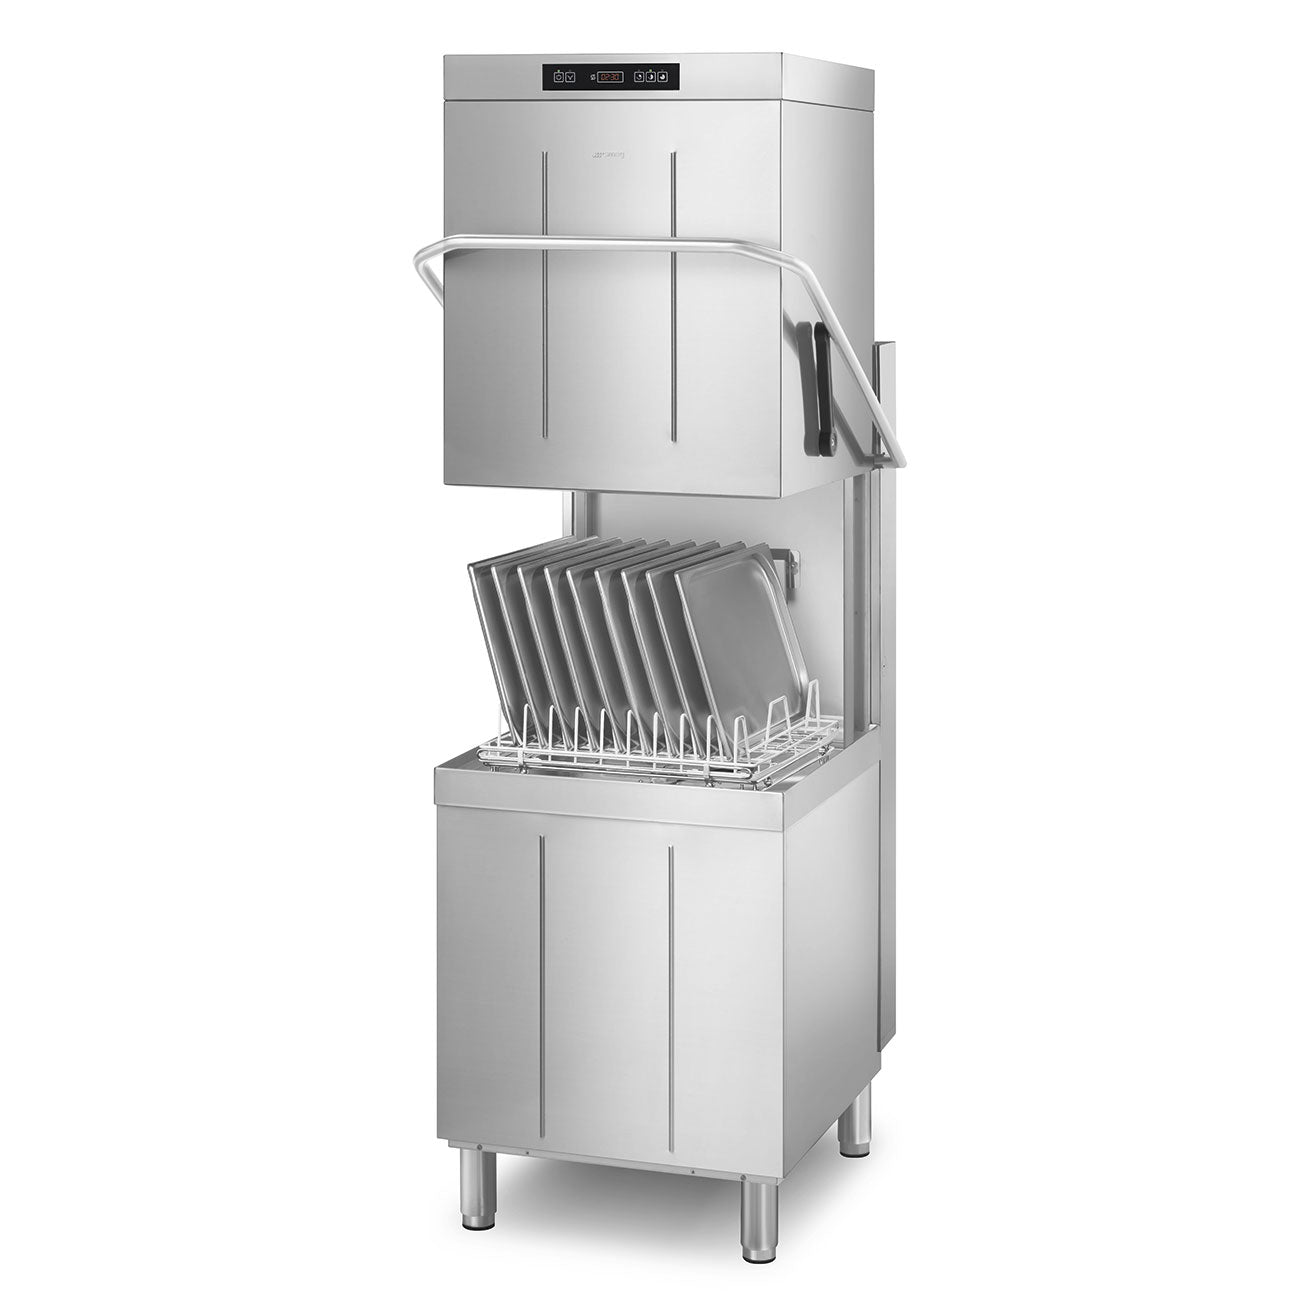 Smeg Ecoline range Hood Type Dishwasher, 3 Wash Programs 500x500 SPH505